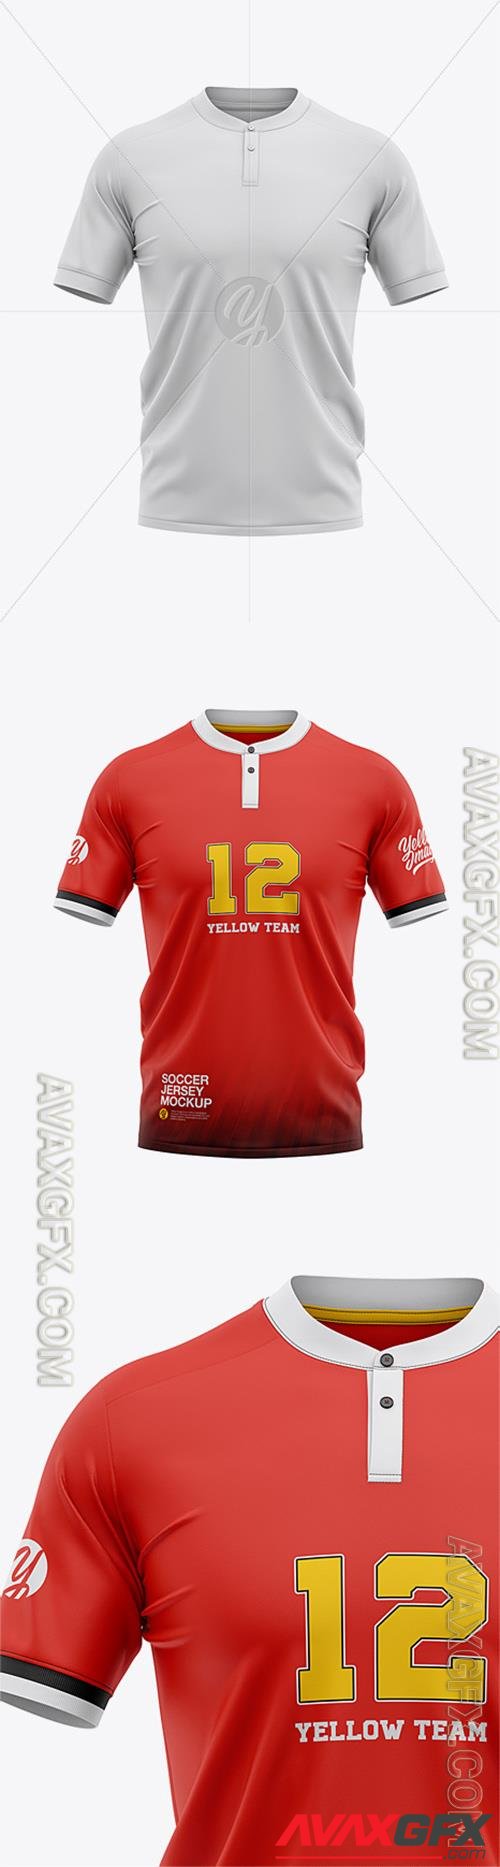 Men’s Henley Collar Soccer Jersey Mockup - Front View - Football Jersey Soccer T-shirt 34557